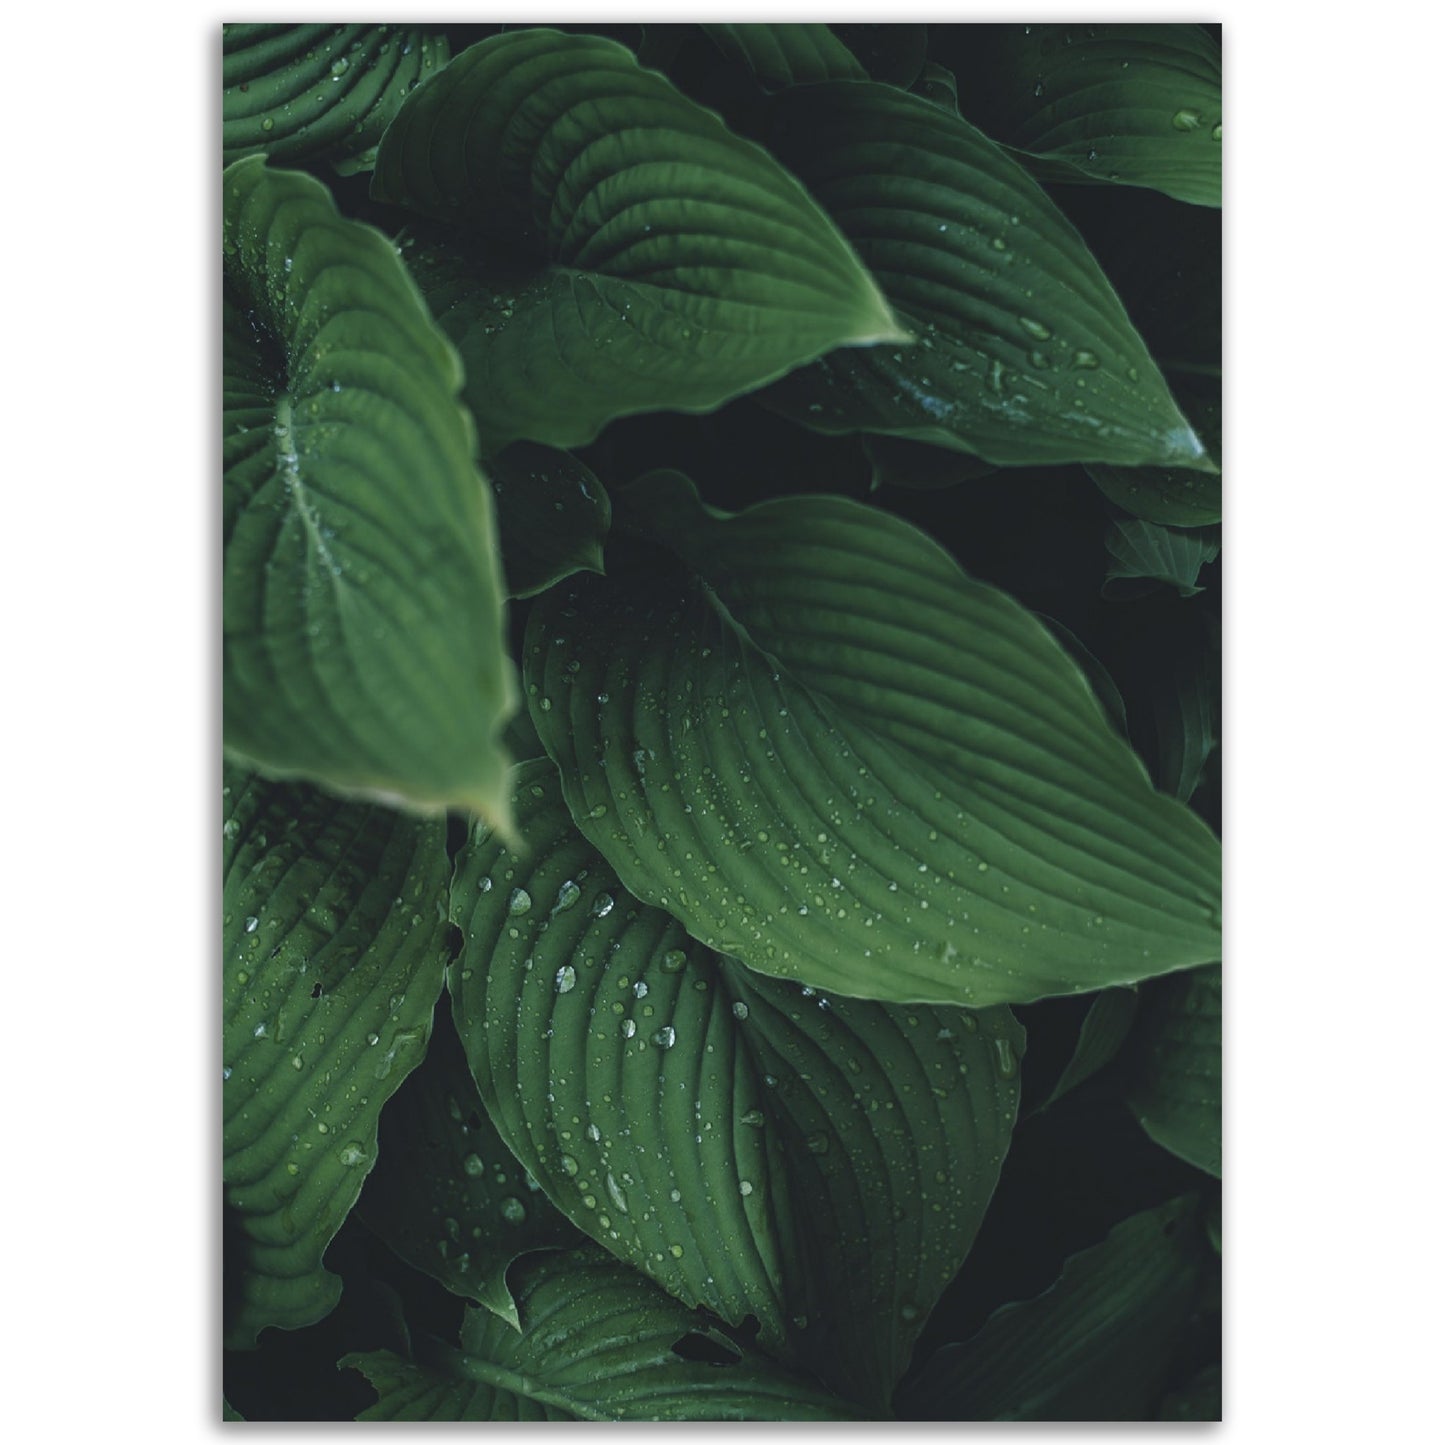 Droplets on Leaves Print